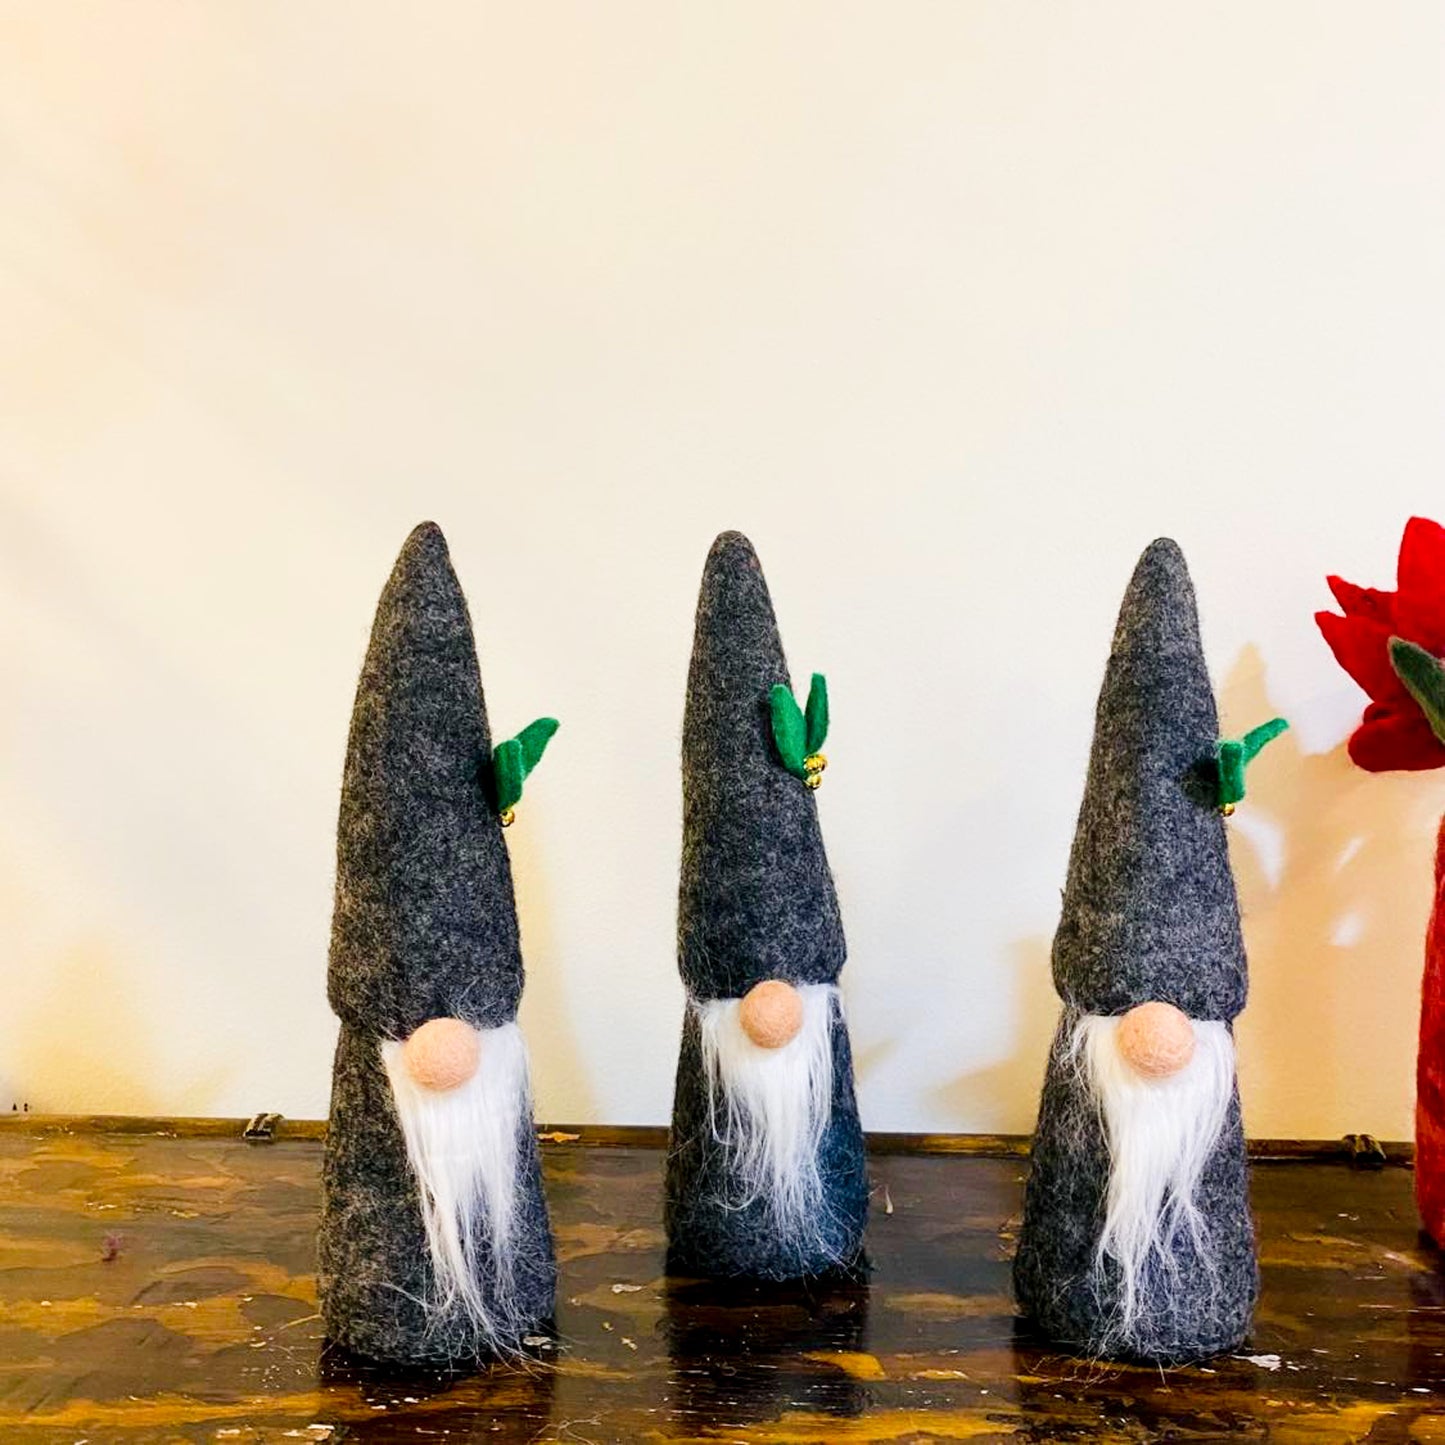 Handmade Holiday Santa Gnome Decoration